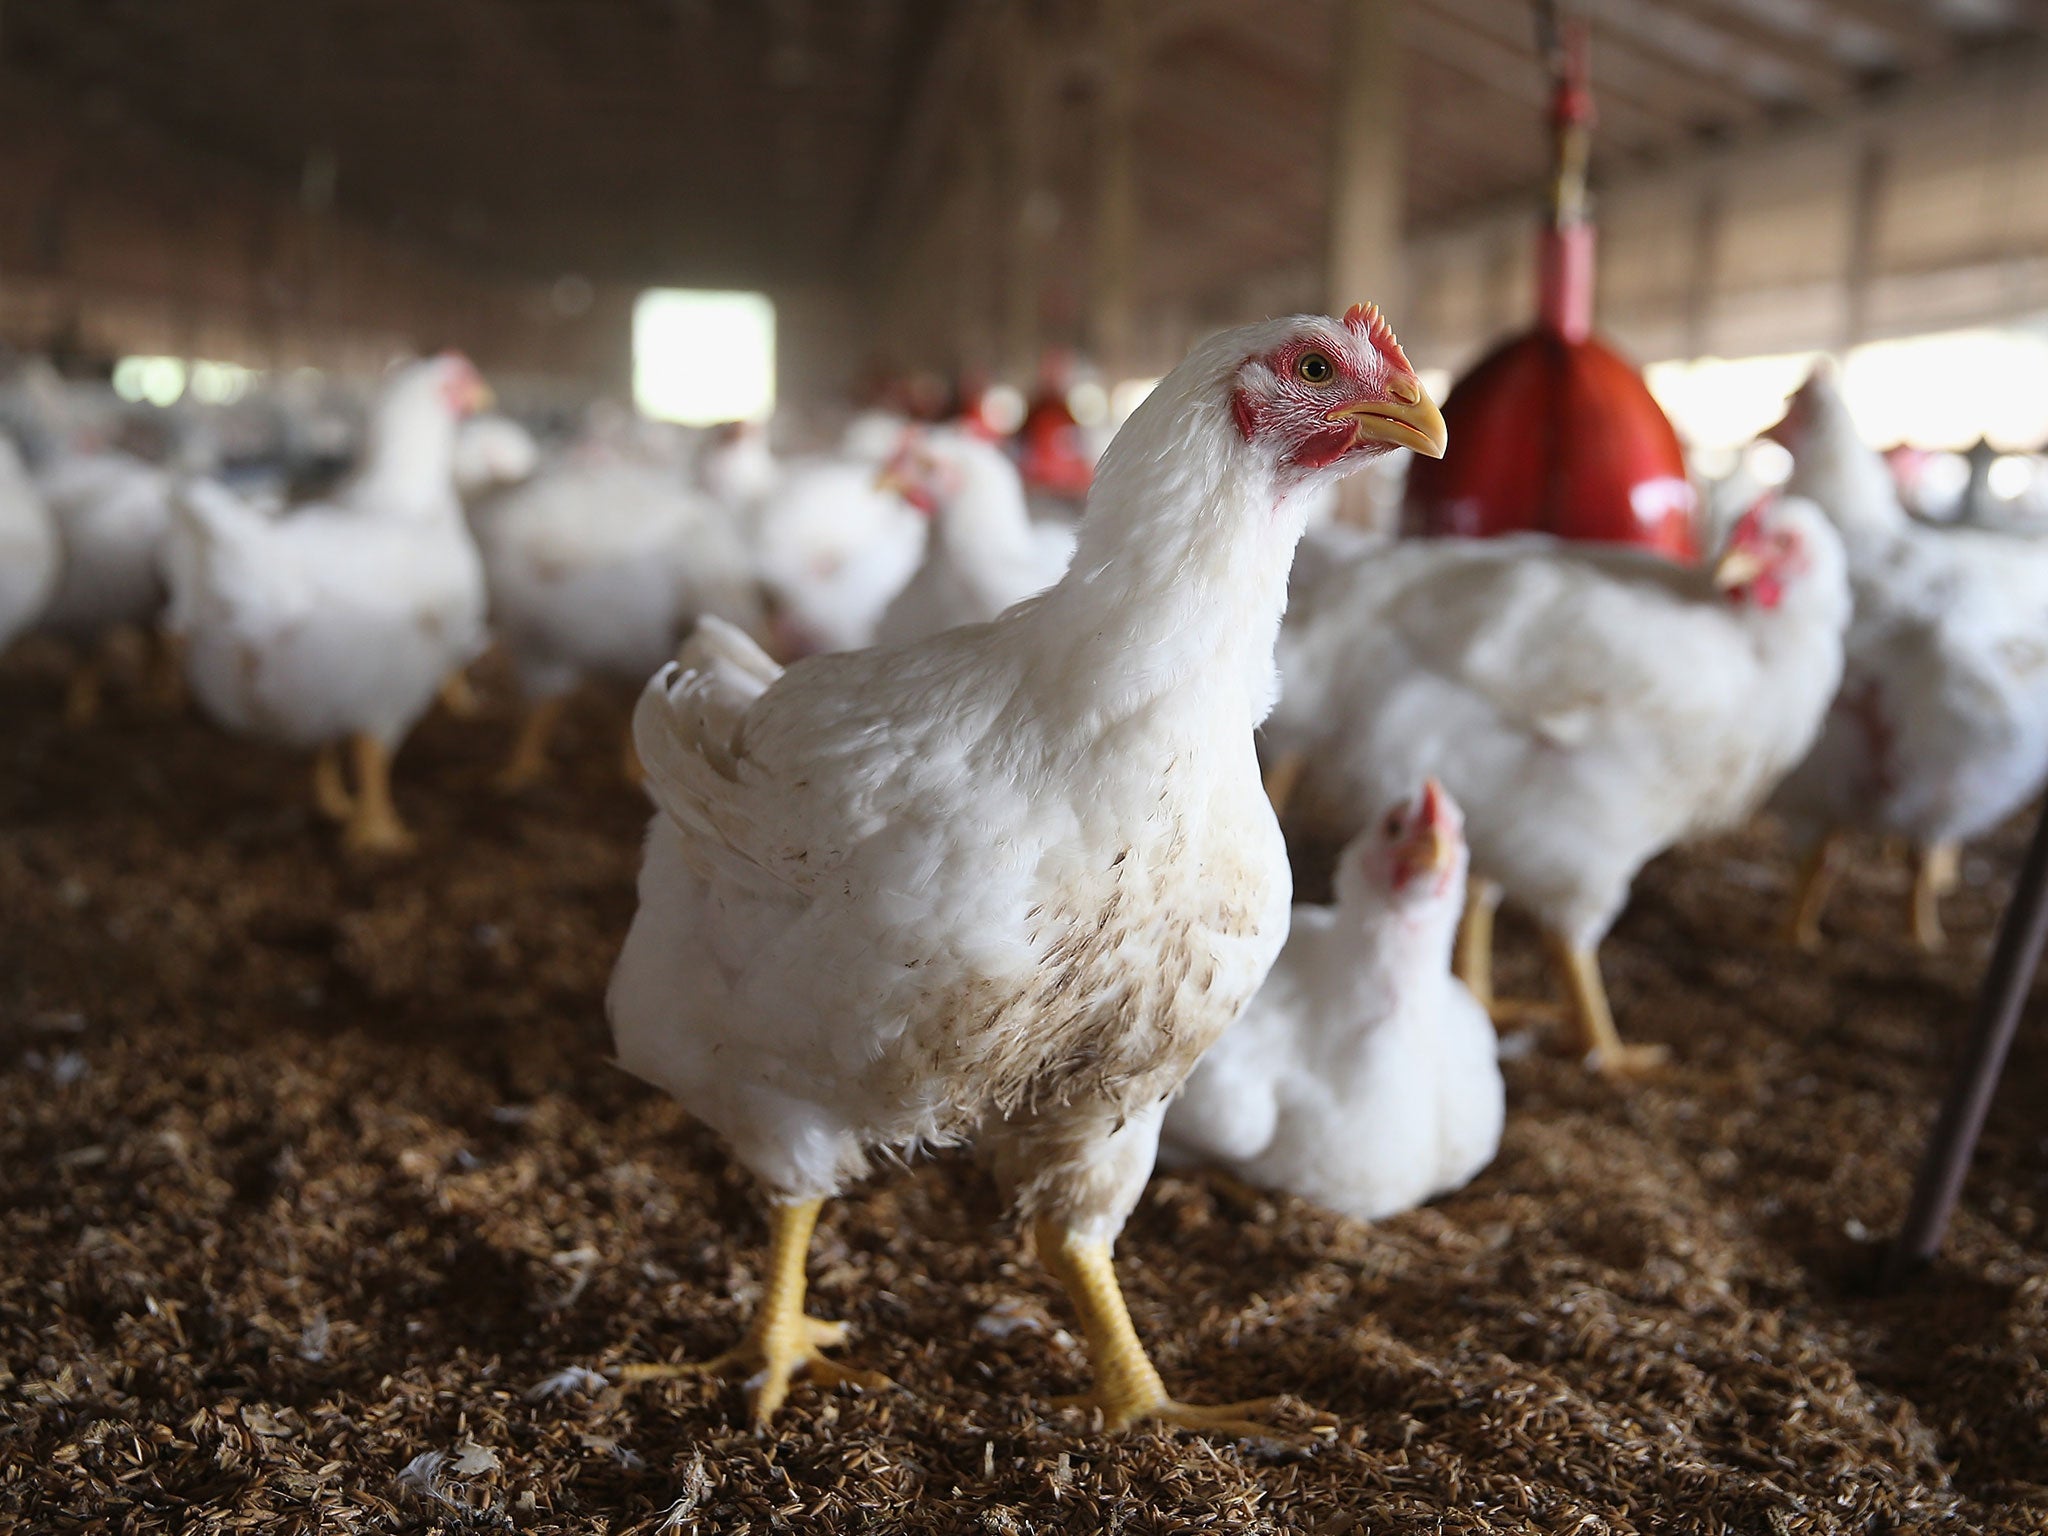 Chickens gather around a feeder at a farm in Iowa